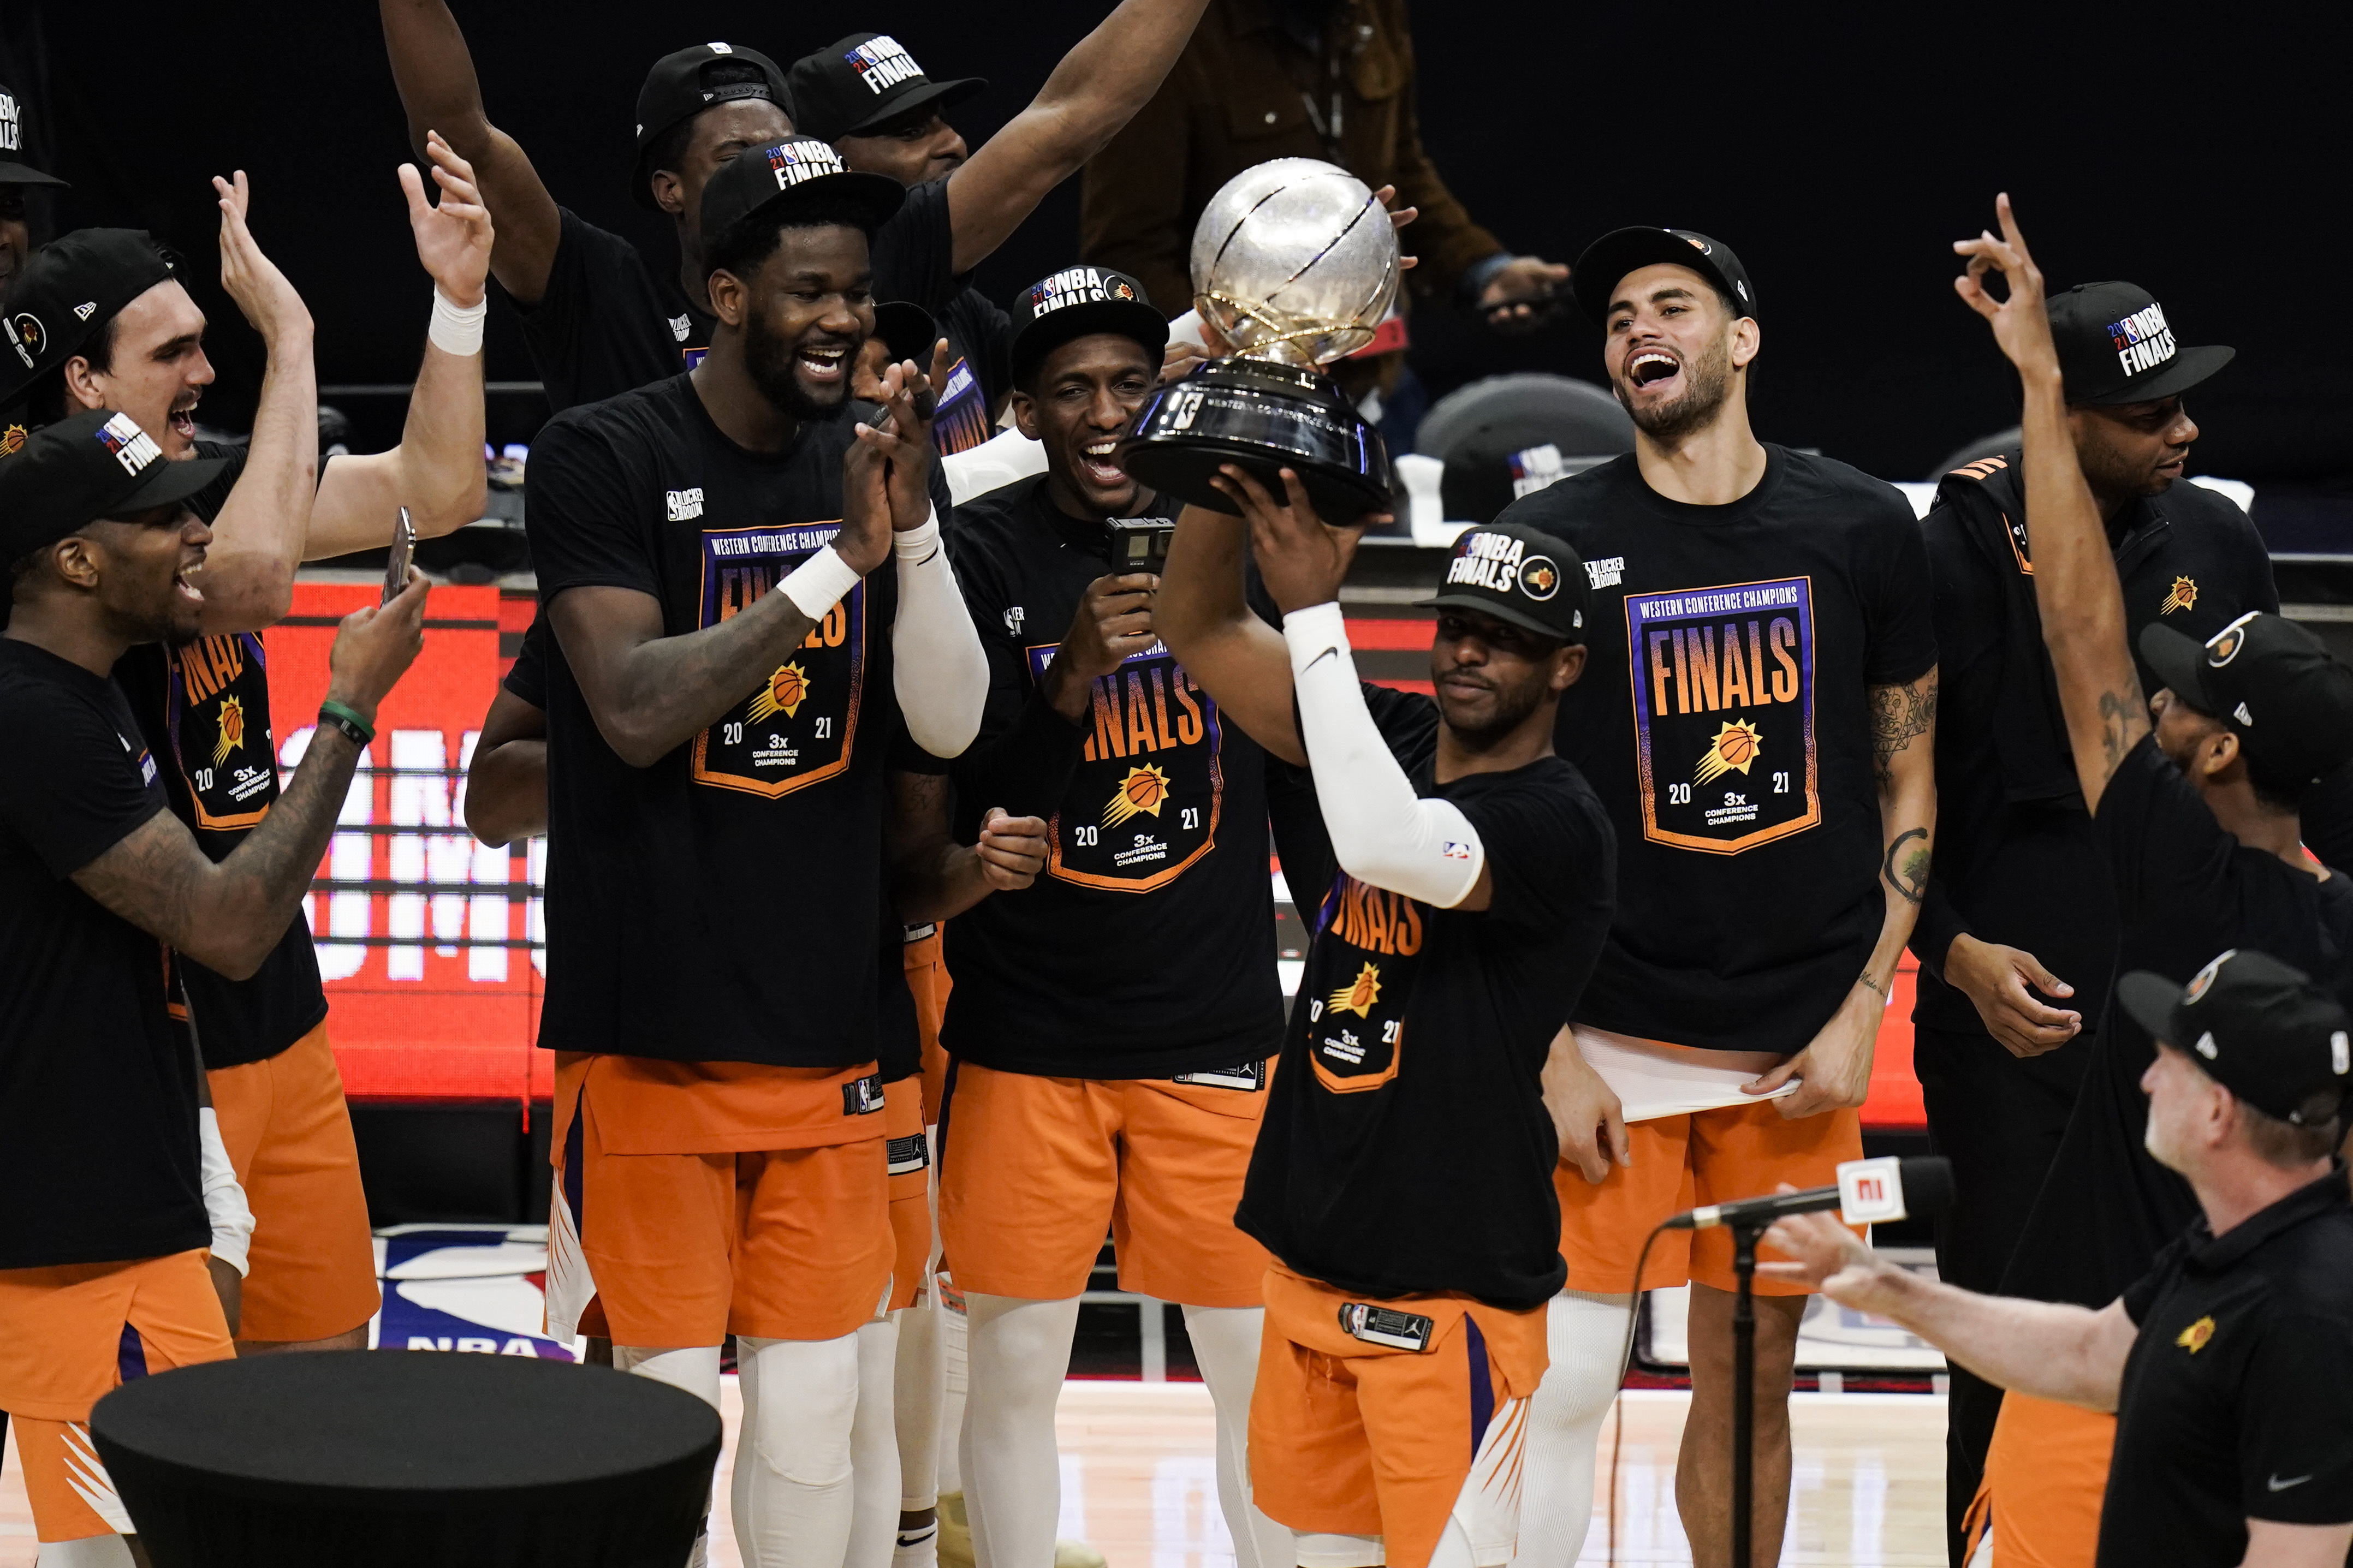 Bucks celebrate the 2021 NBA championship with President Biden